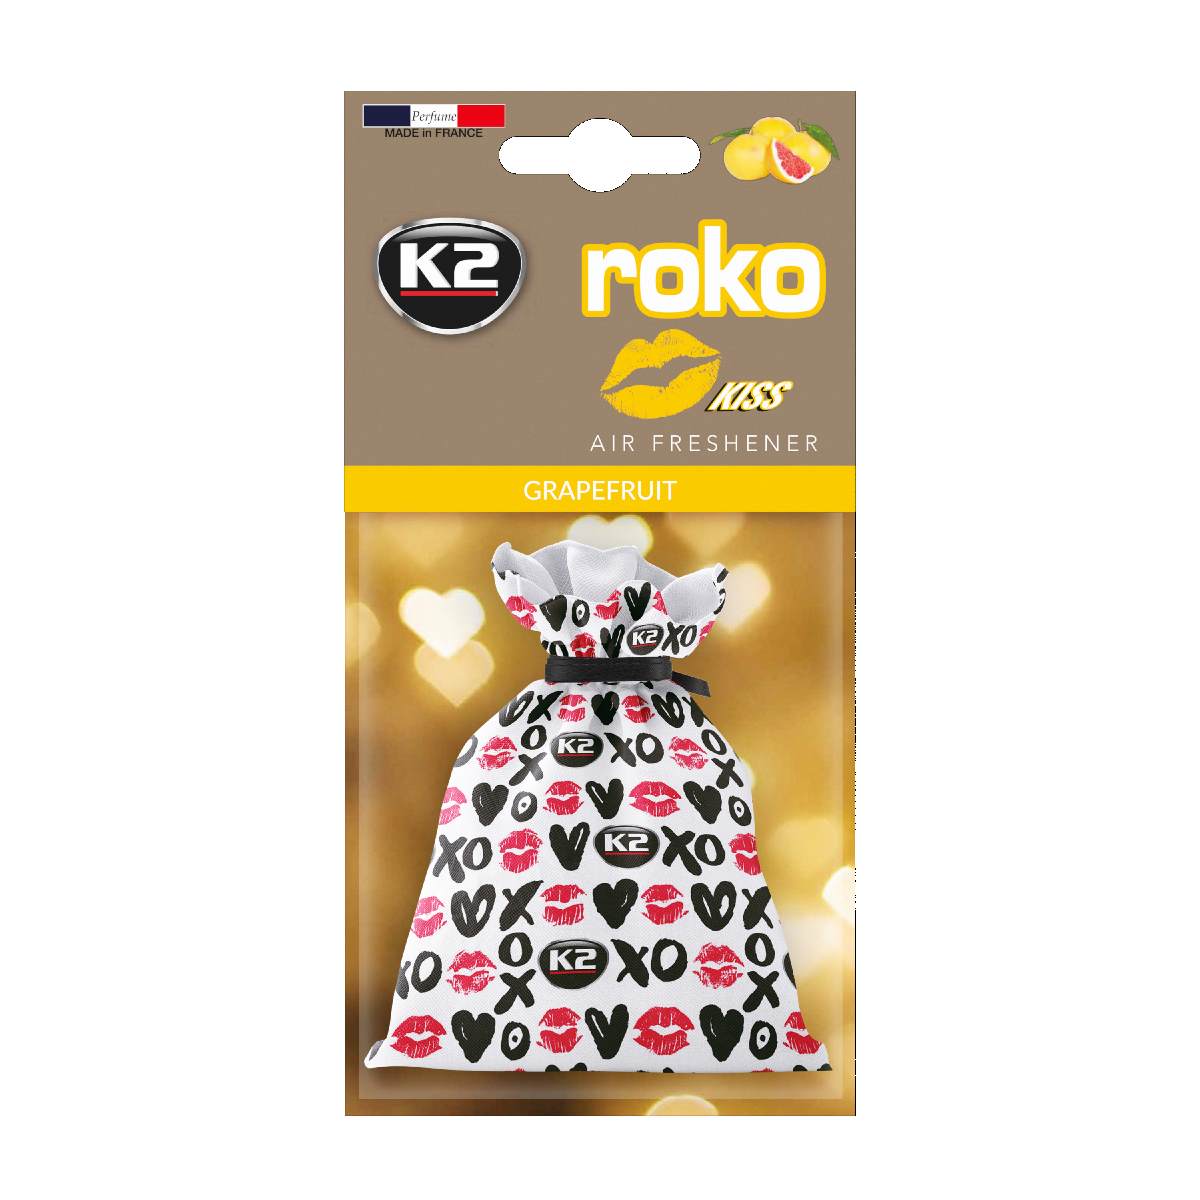 Air fresheners Air freshener ROKO KISS GRAPEFRUIT  Art. K2V824K